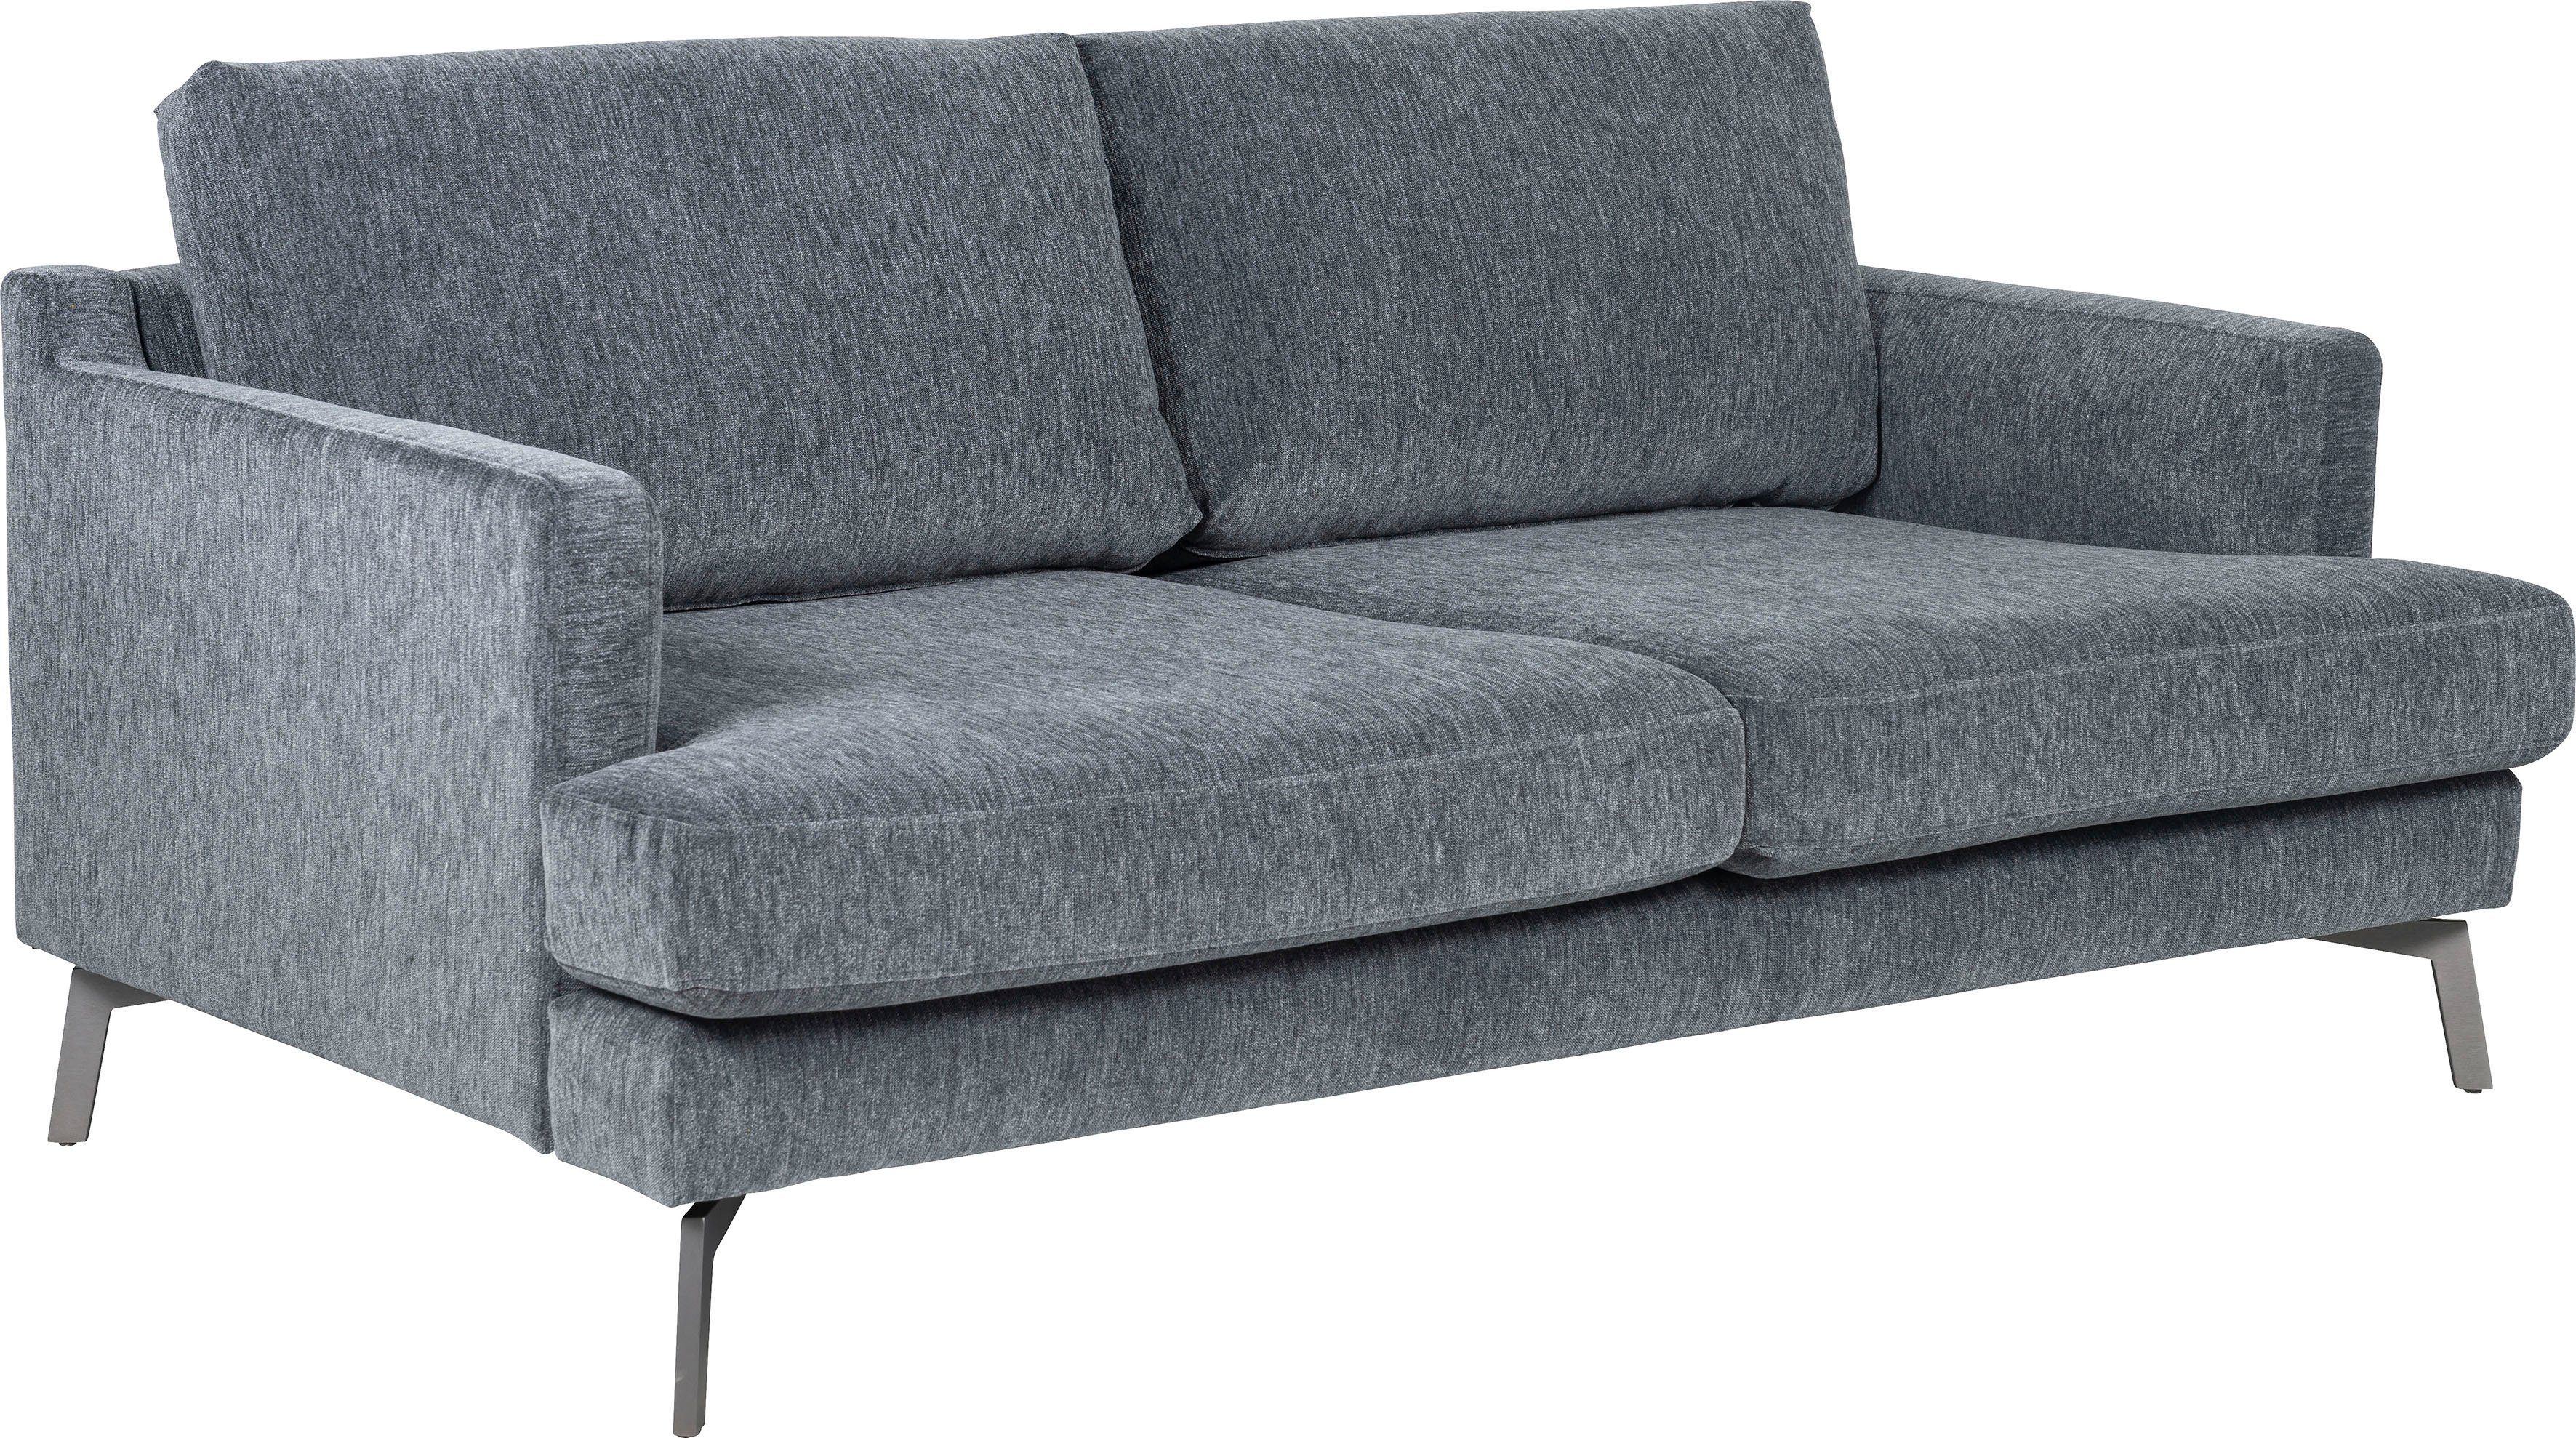 Klassiker ein Saga, skandinavischen furninova 2,5-Sitzer Design grey im